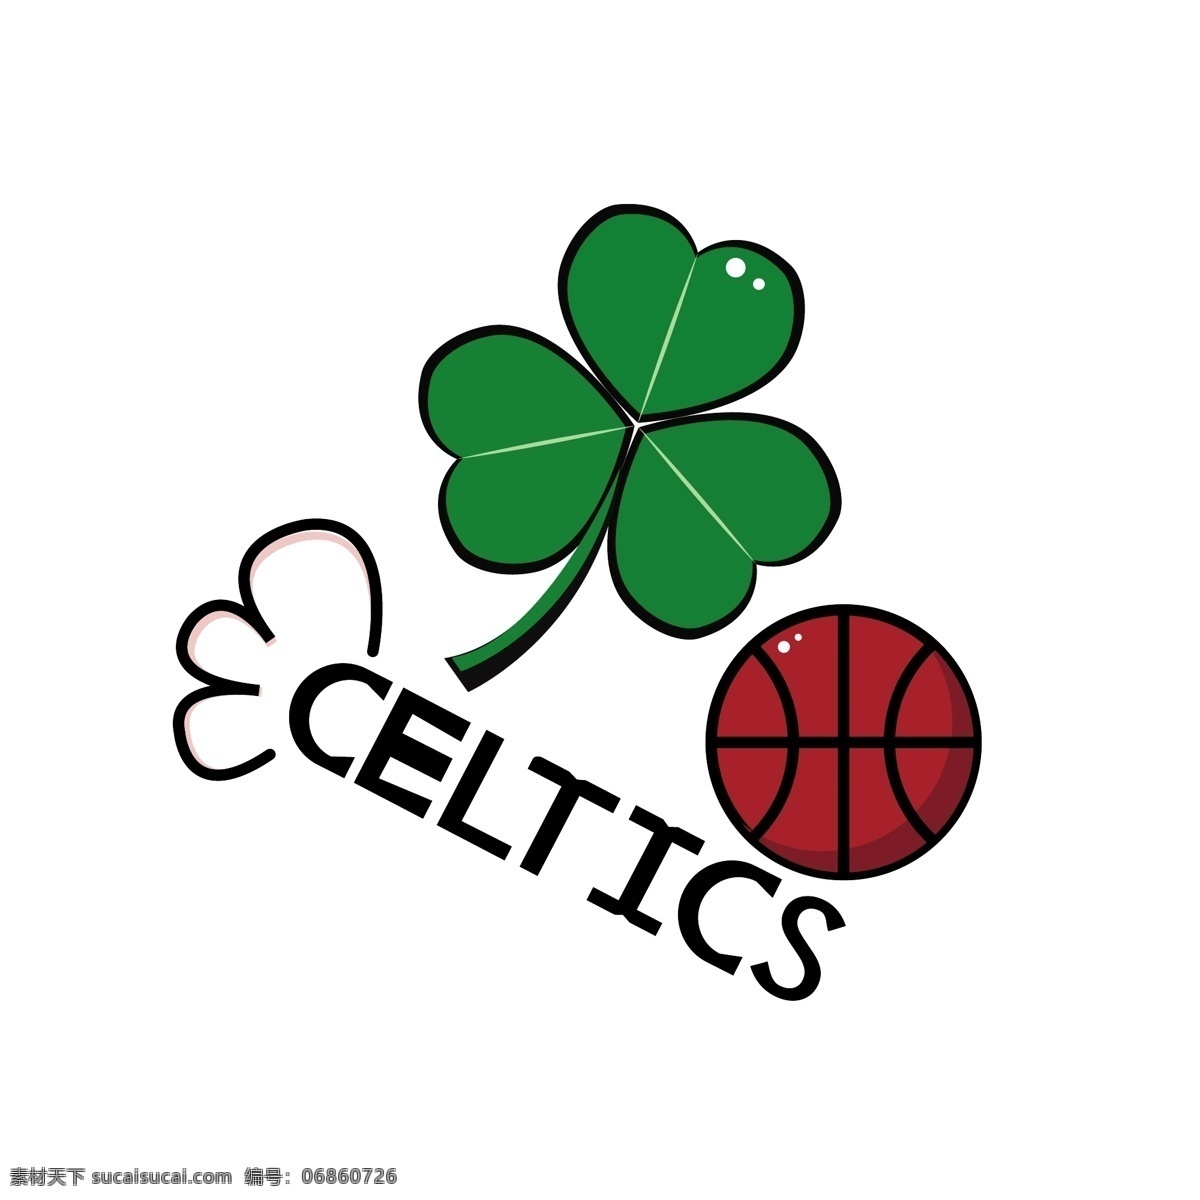 nba 球队 标志 装饰 图案 商用 凯尔特人 篮球 装饰图案 篮球标志